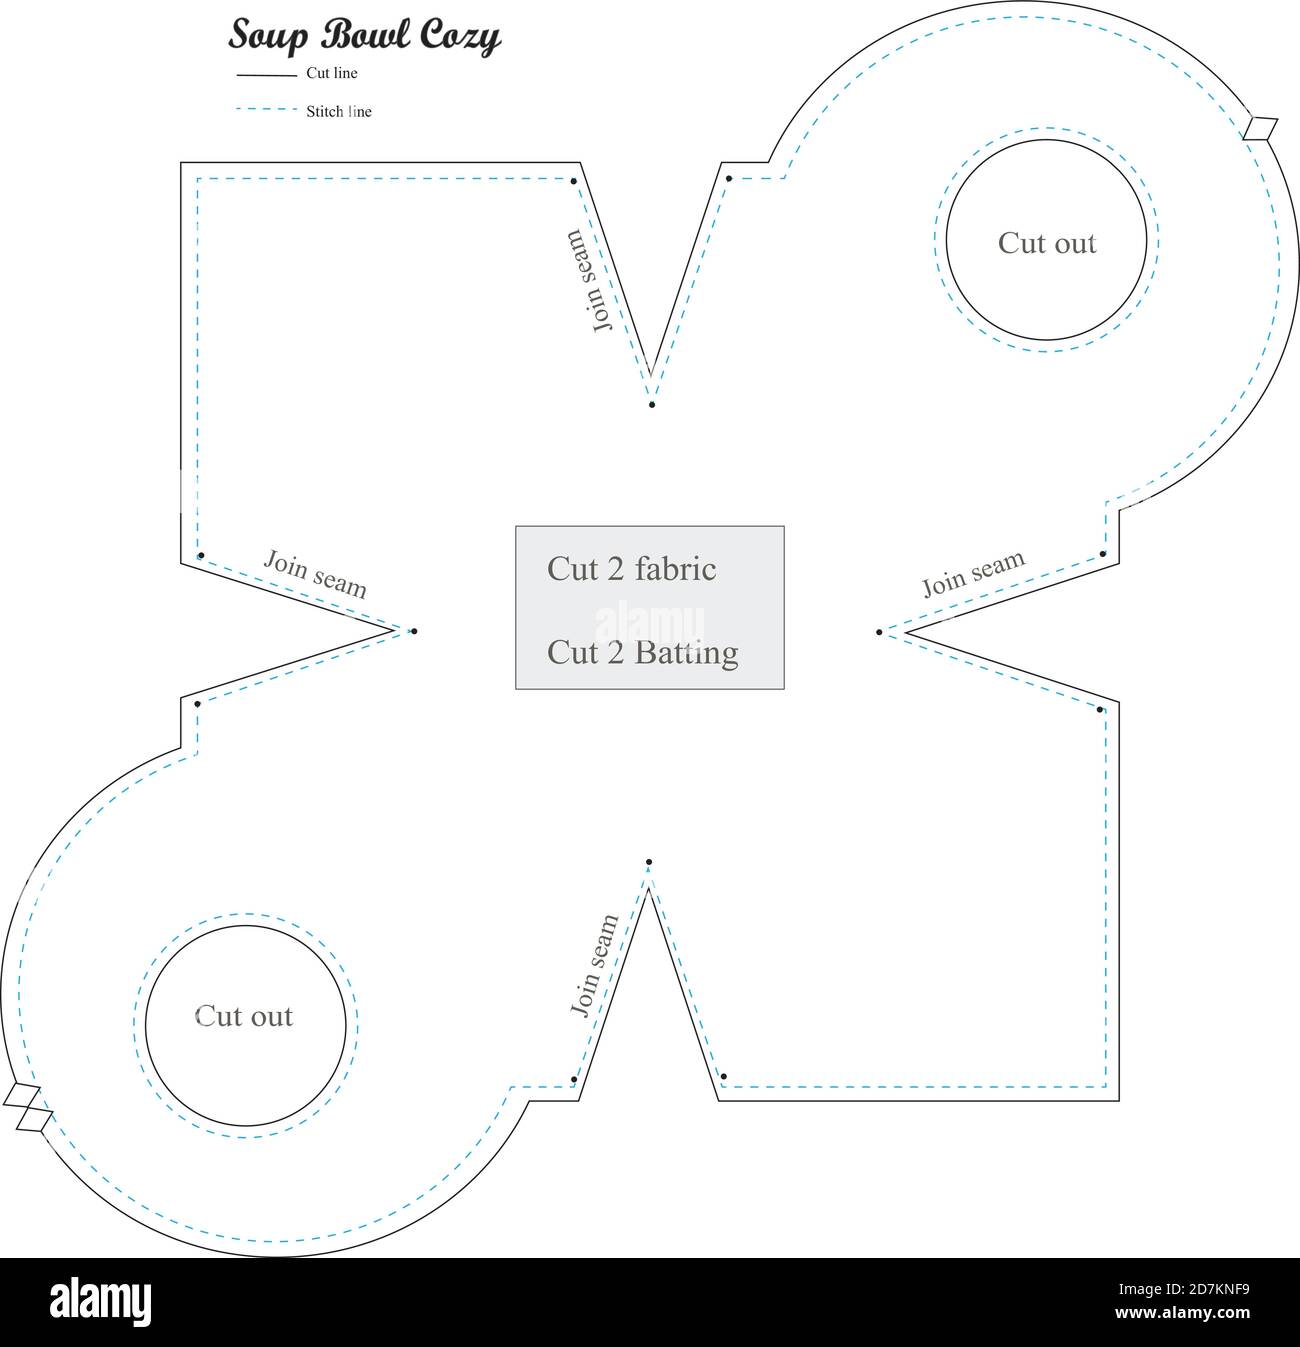 Soup Bowl Cozy Pattern Stock Vector Image & Art - Alamy